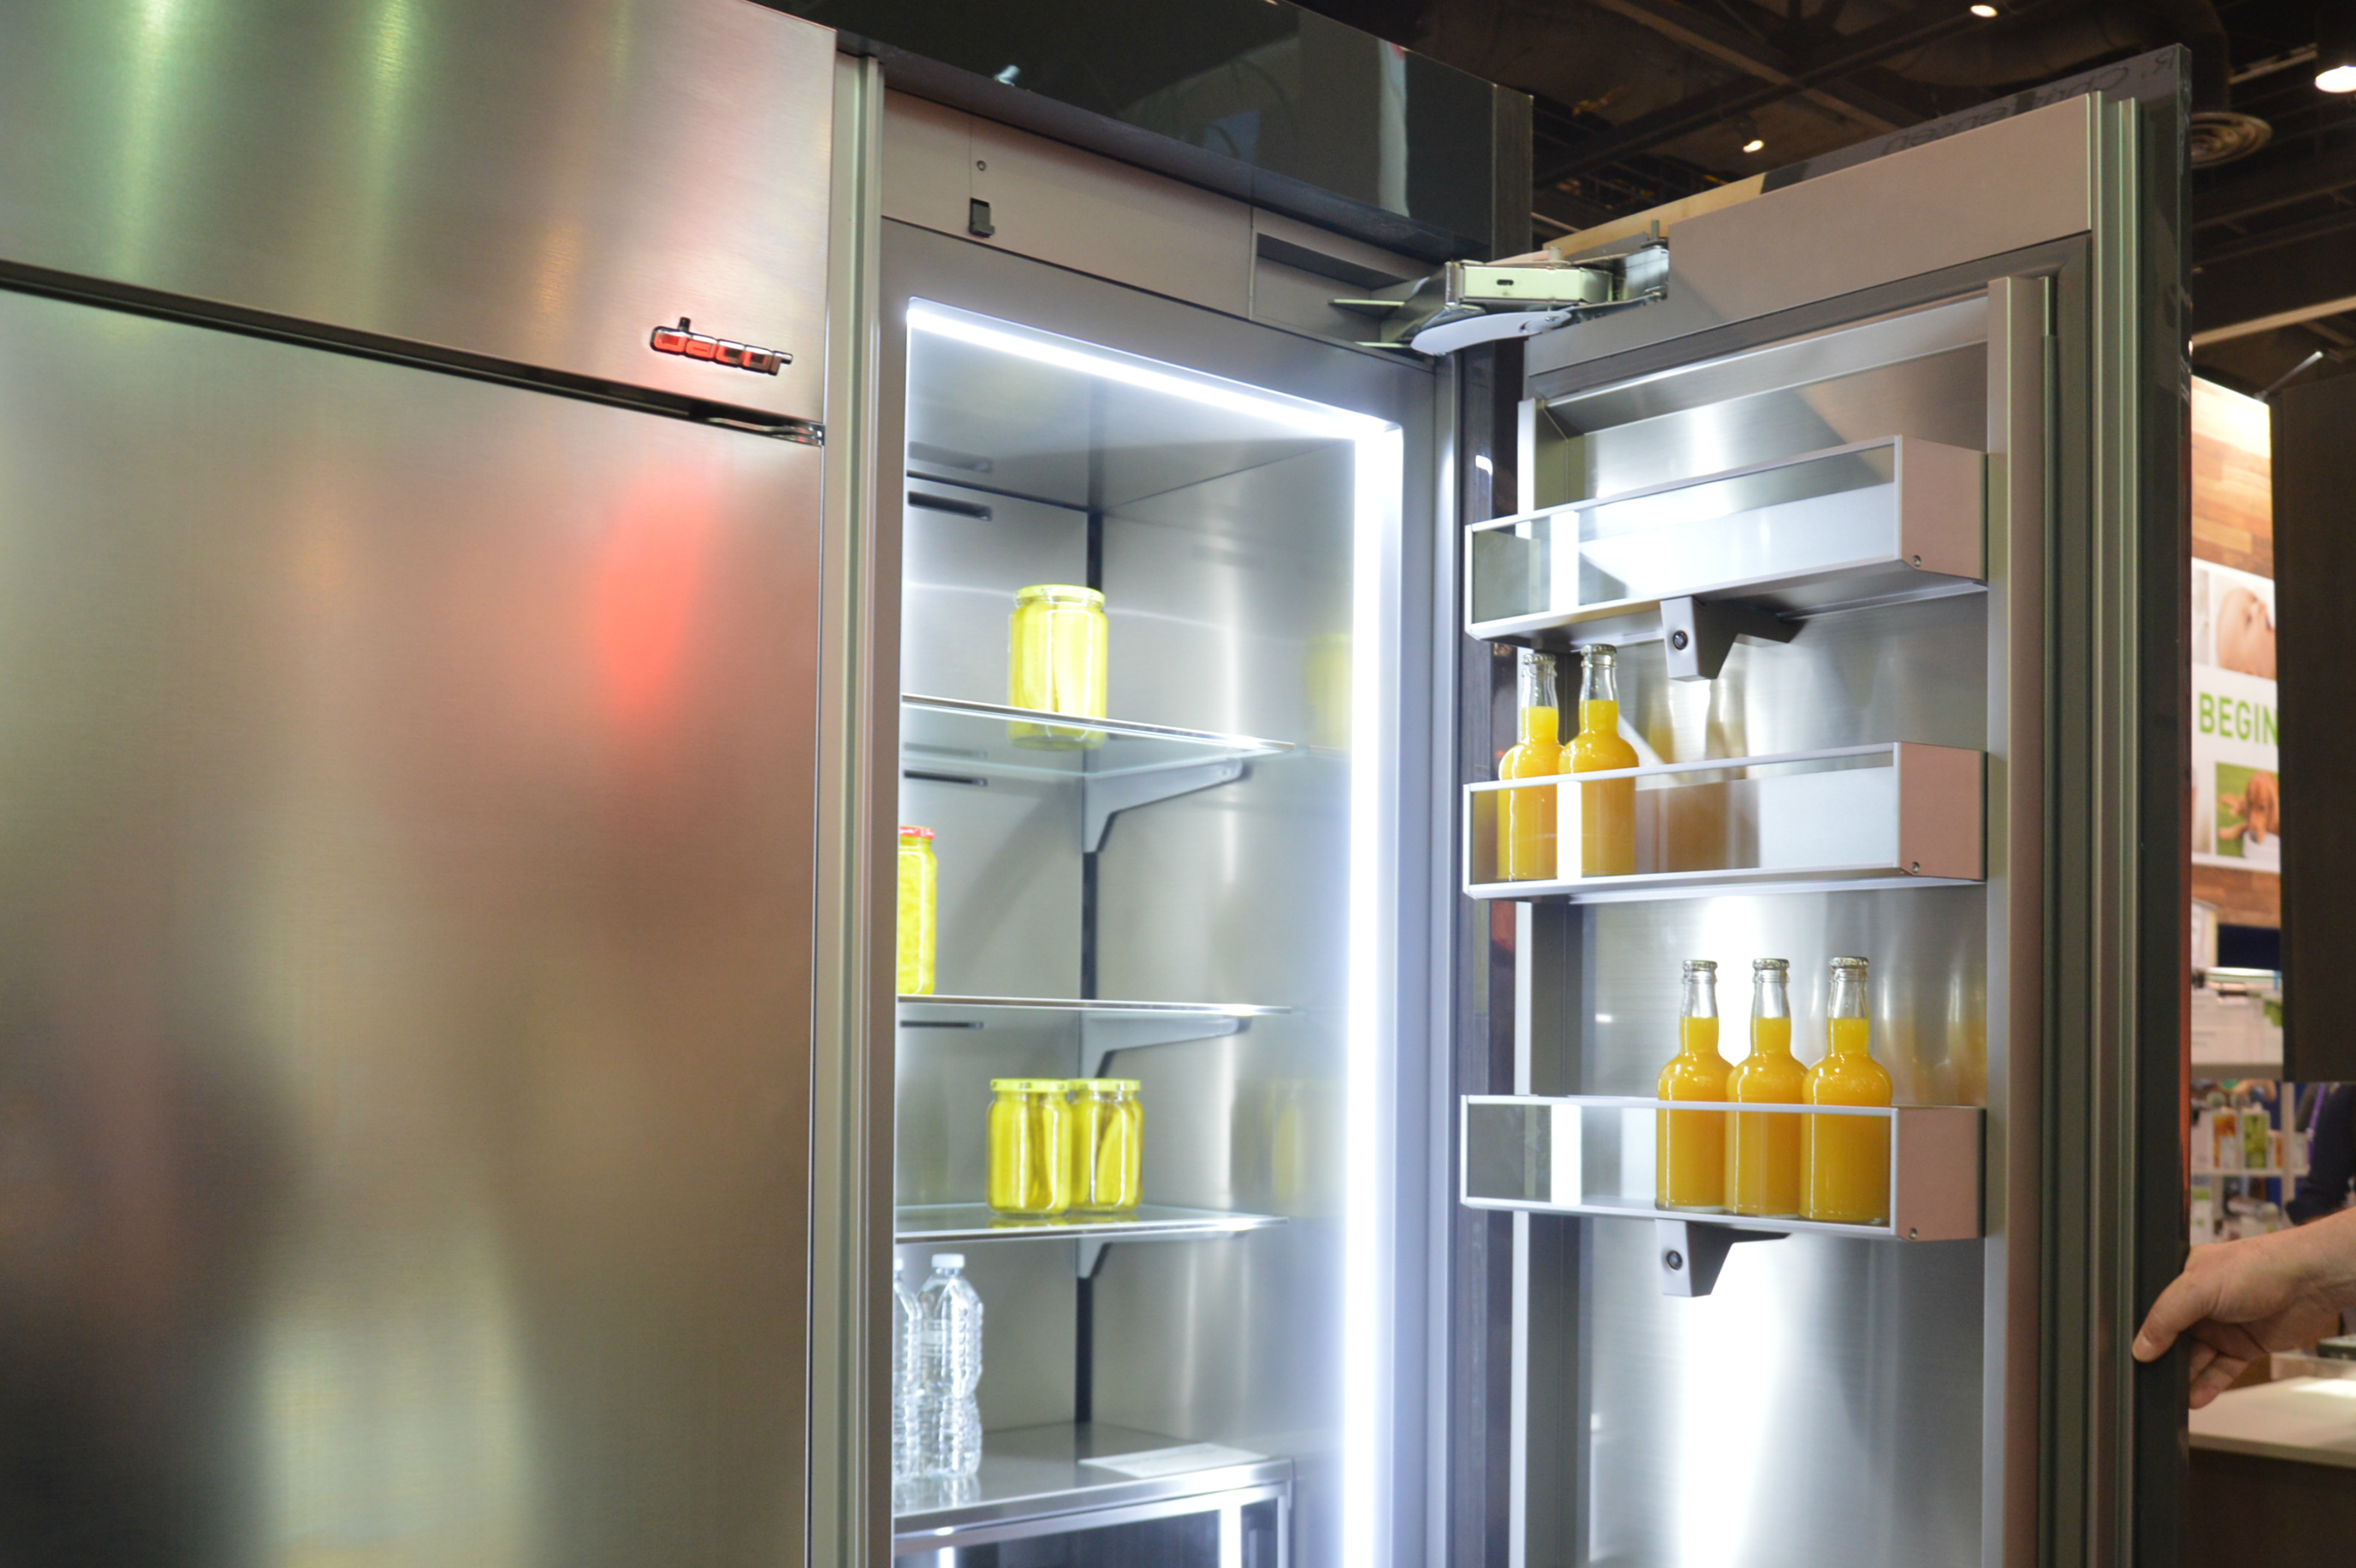 dacor heritage column refrigerator kbis 2017 fridge 2